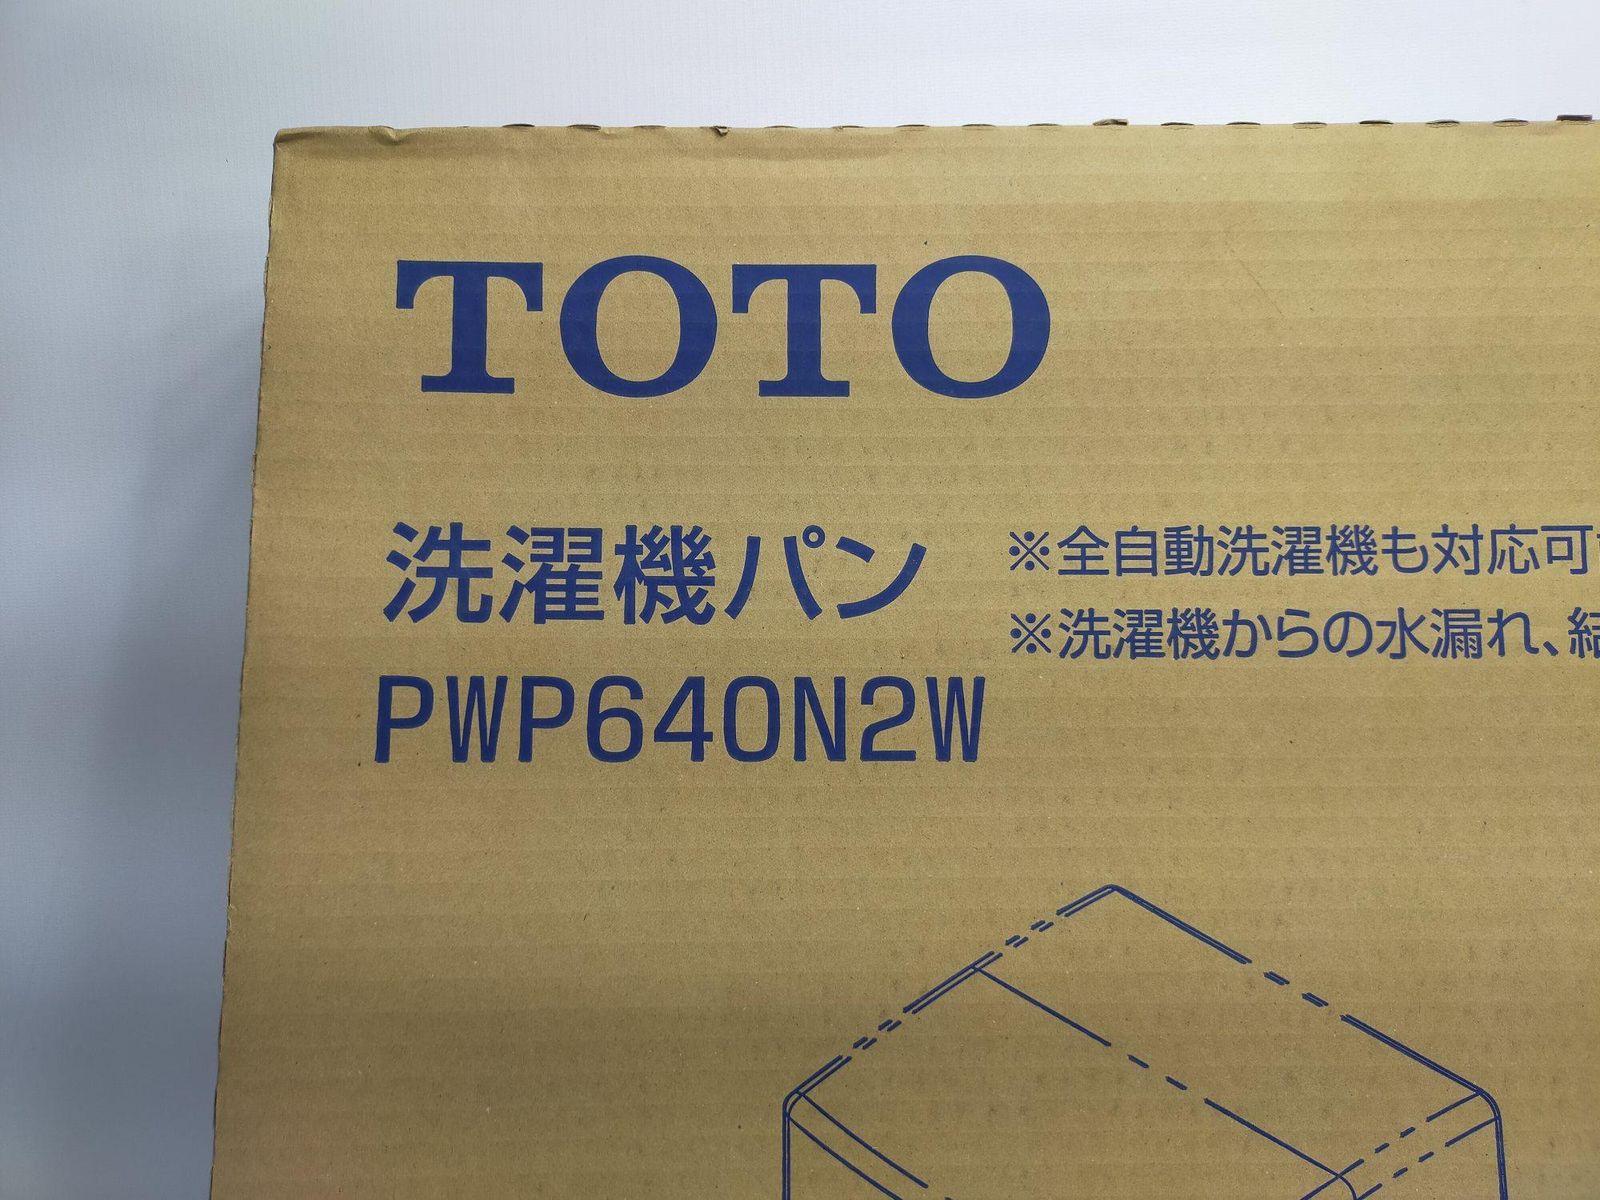 TOTO PWP640N2W 洗濯機パン A4840B14 - メルカリ